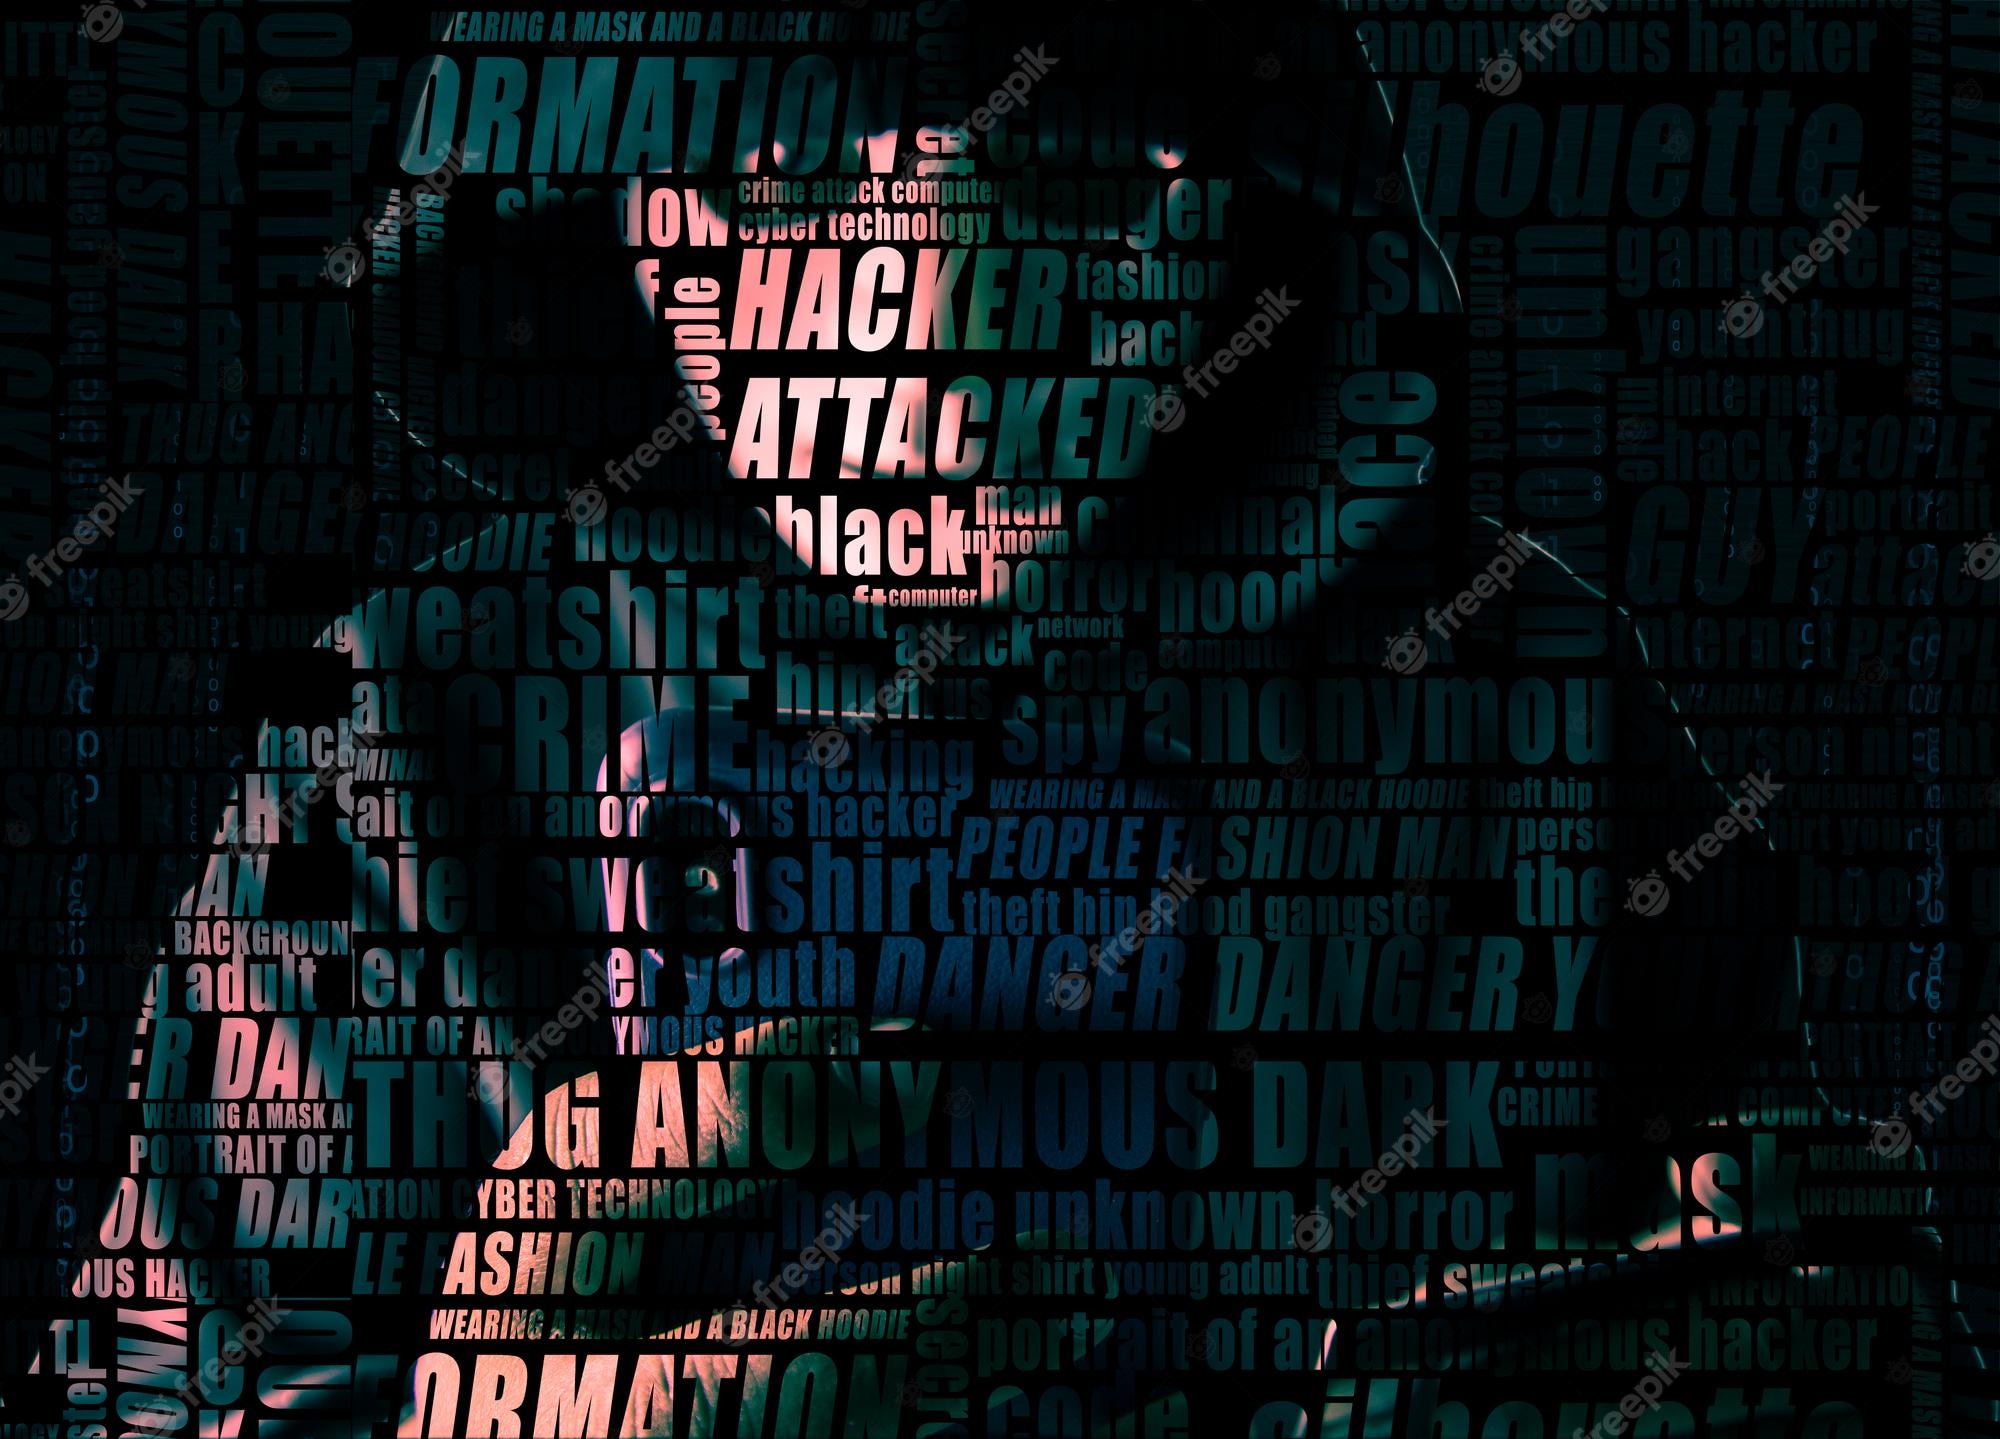 hacker wallpaper